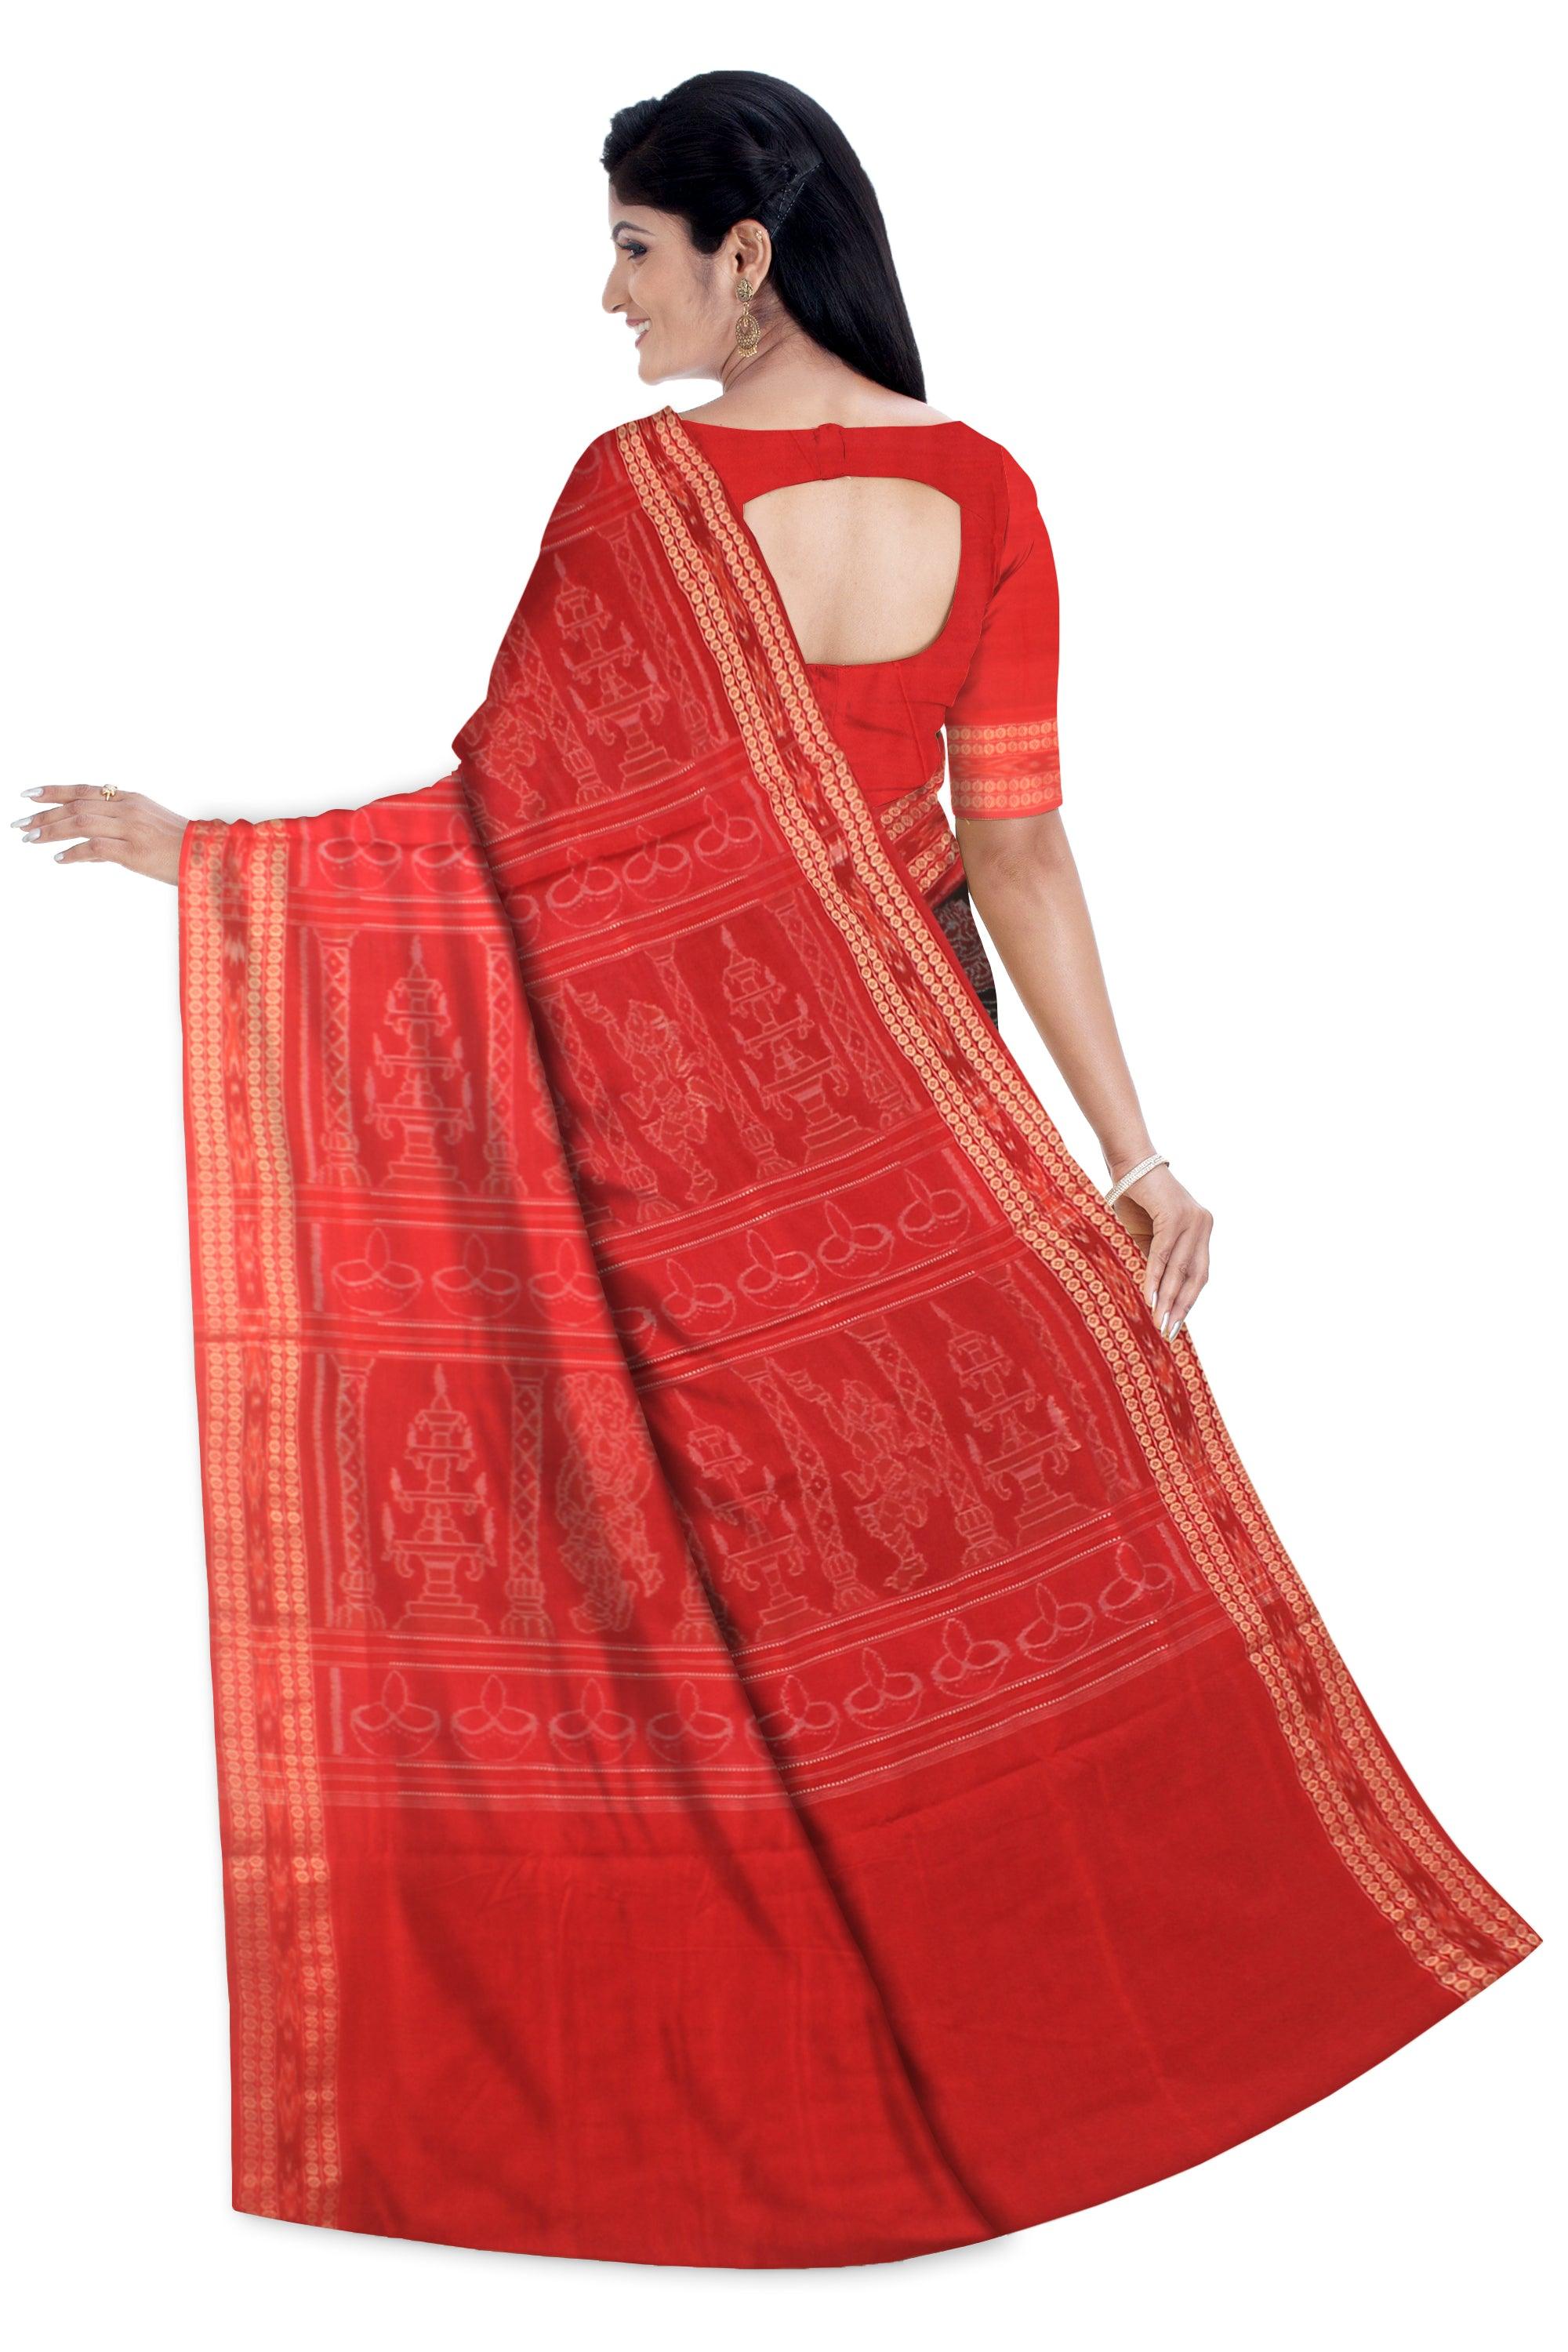 Bada Jagara design Sambalpuri cotton Saree in   Black and Red colour  with blouse piece. - Koshali Arts & Crafts Enterprise